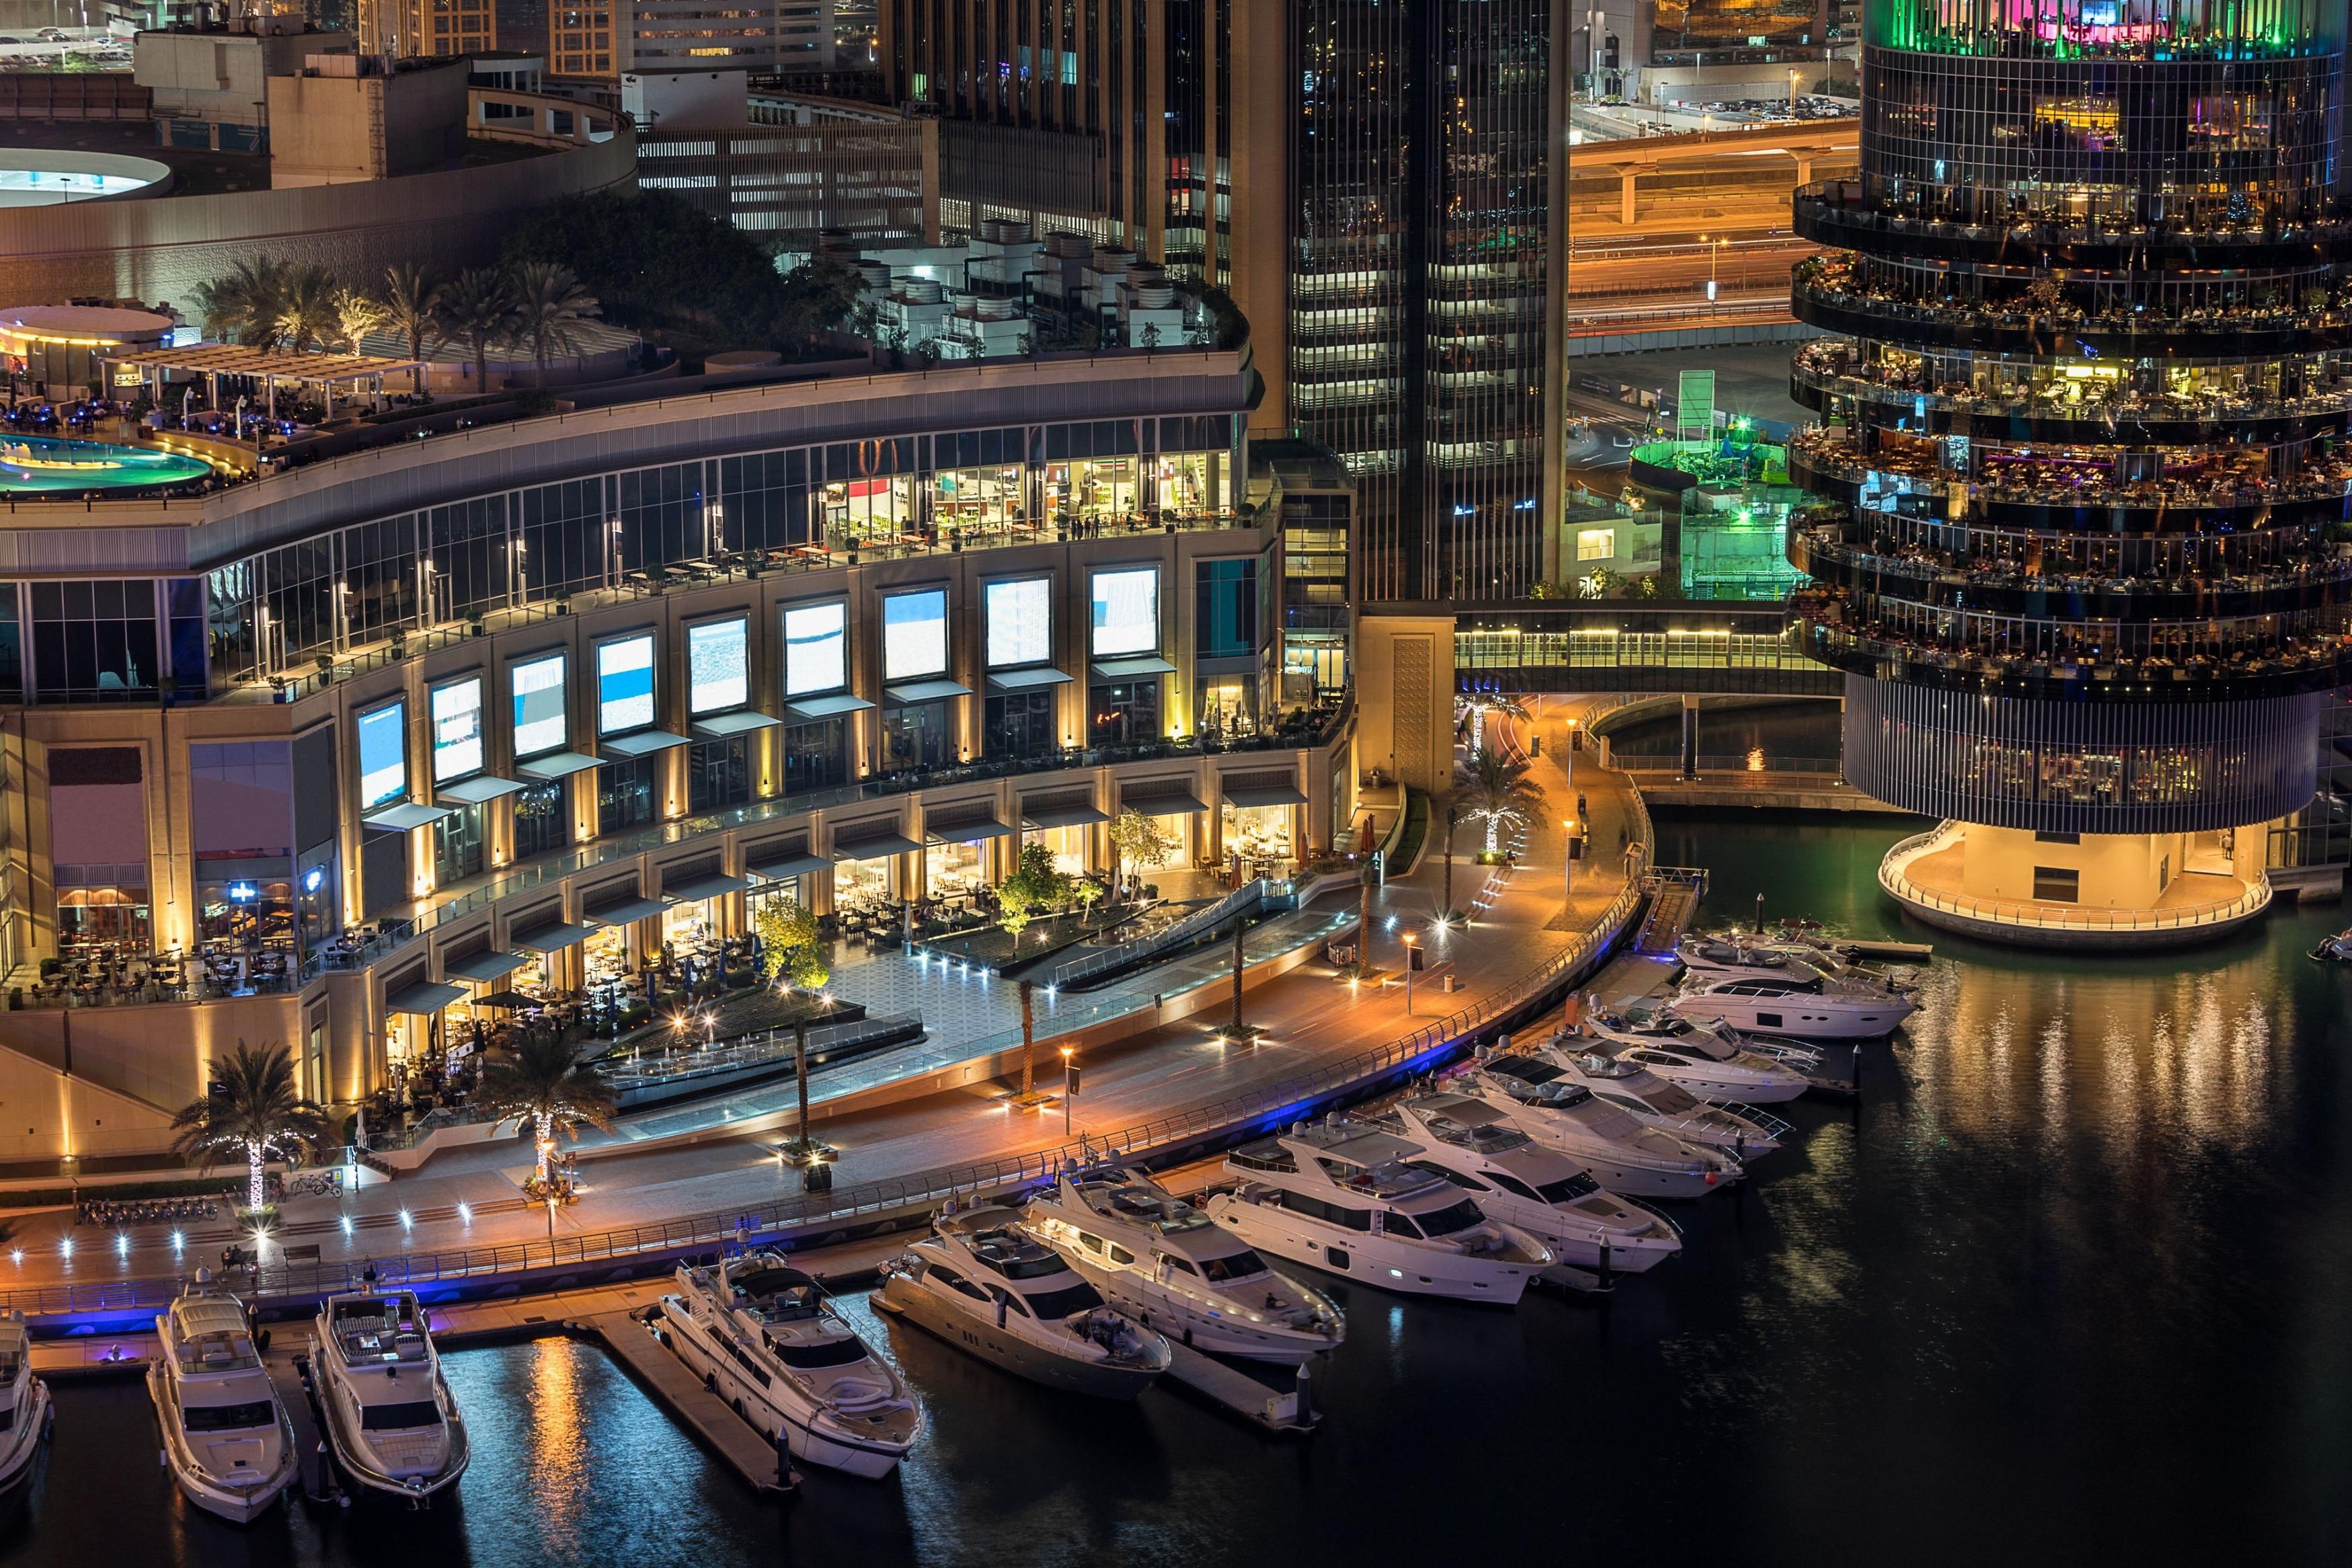 Explore 140 stores and 21 dining options at Dubai Marina mall